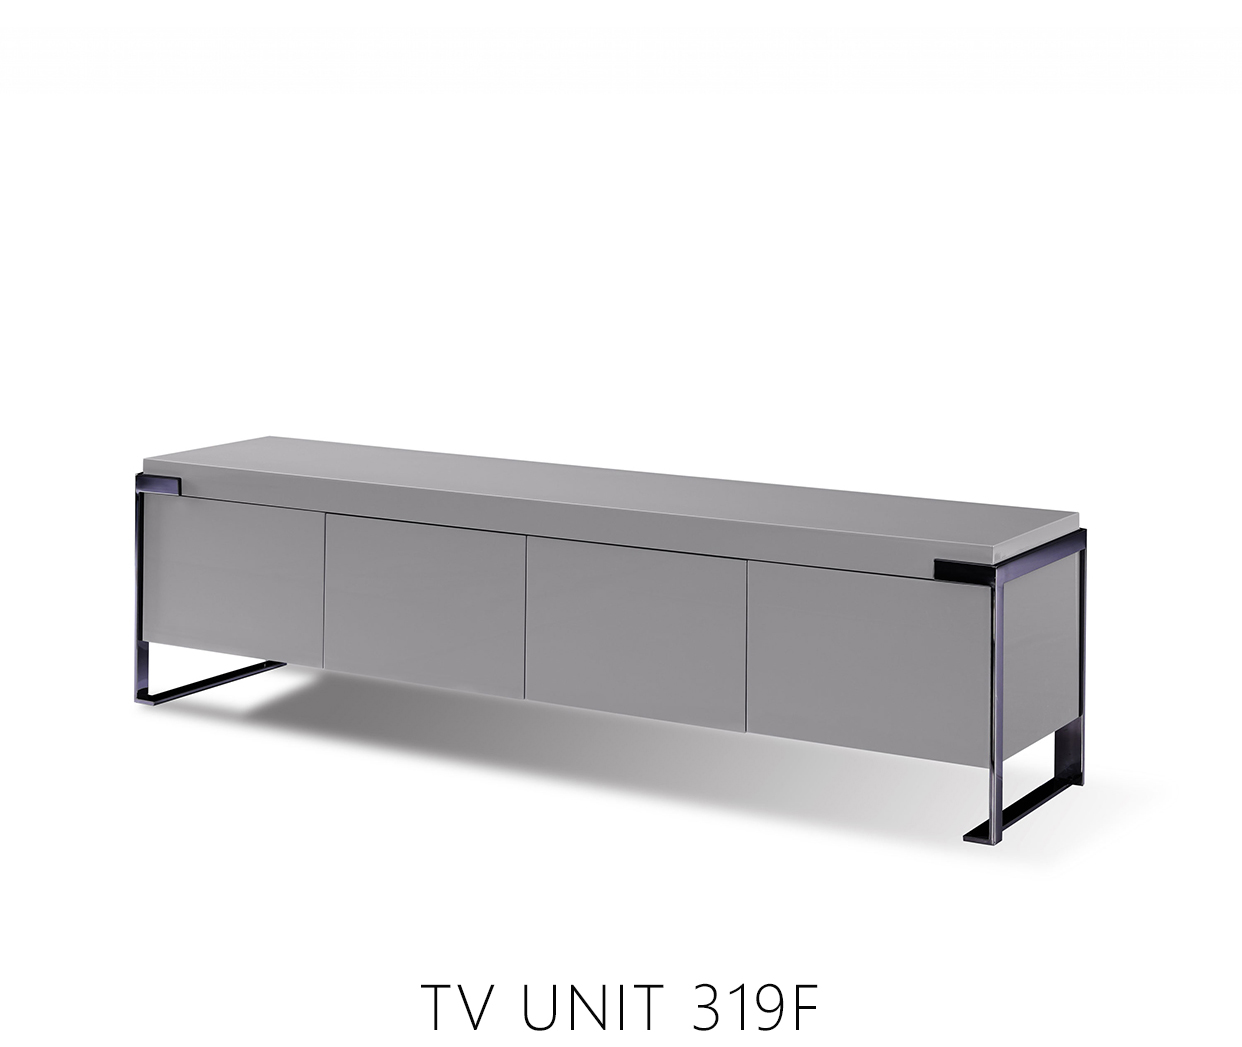 TV UNIT 319F